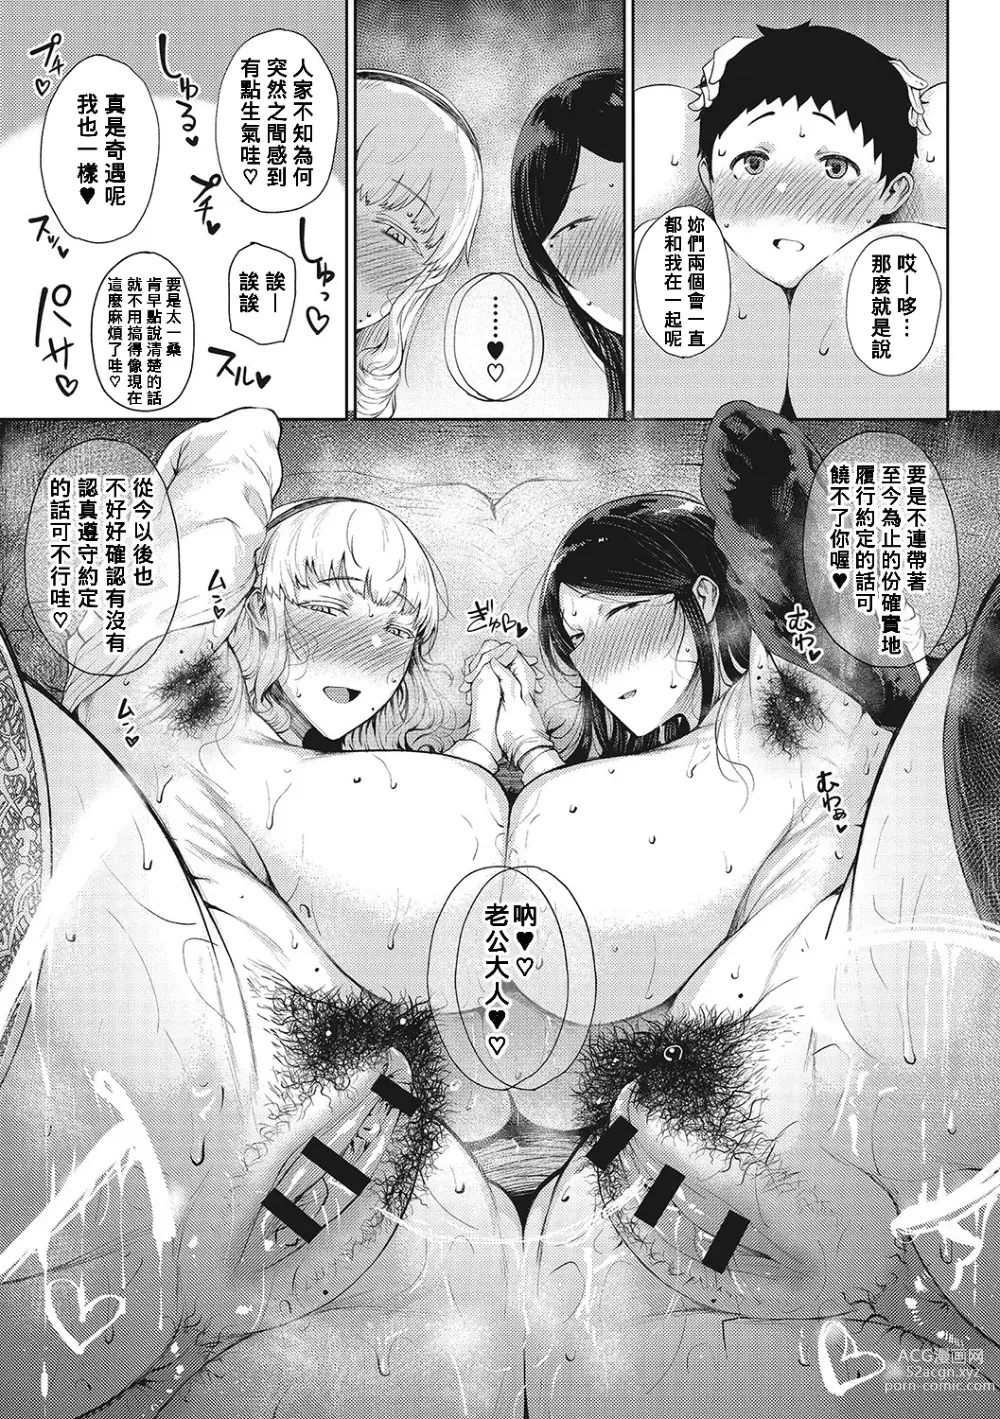 Page 13 of manga Saitan no Yakusoku Koupen